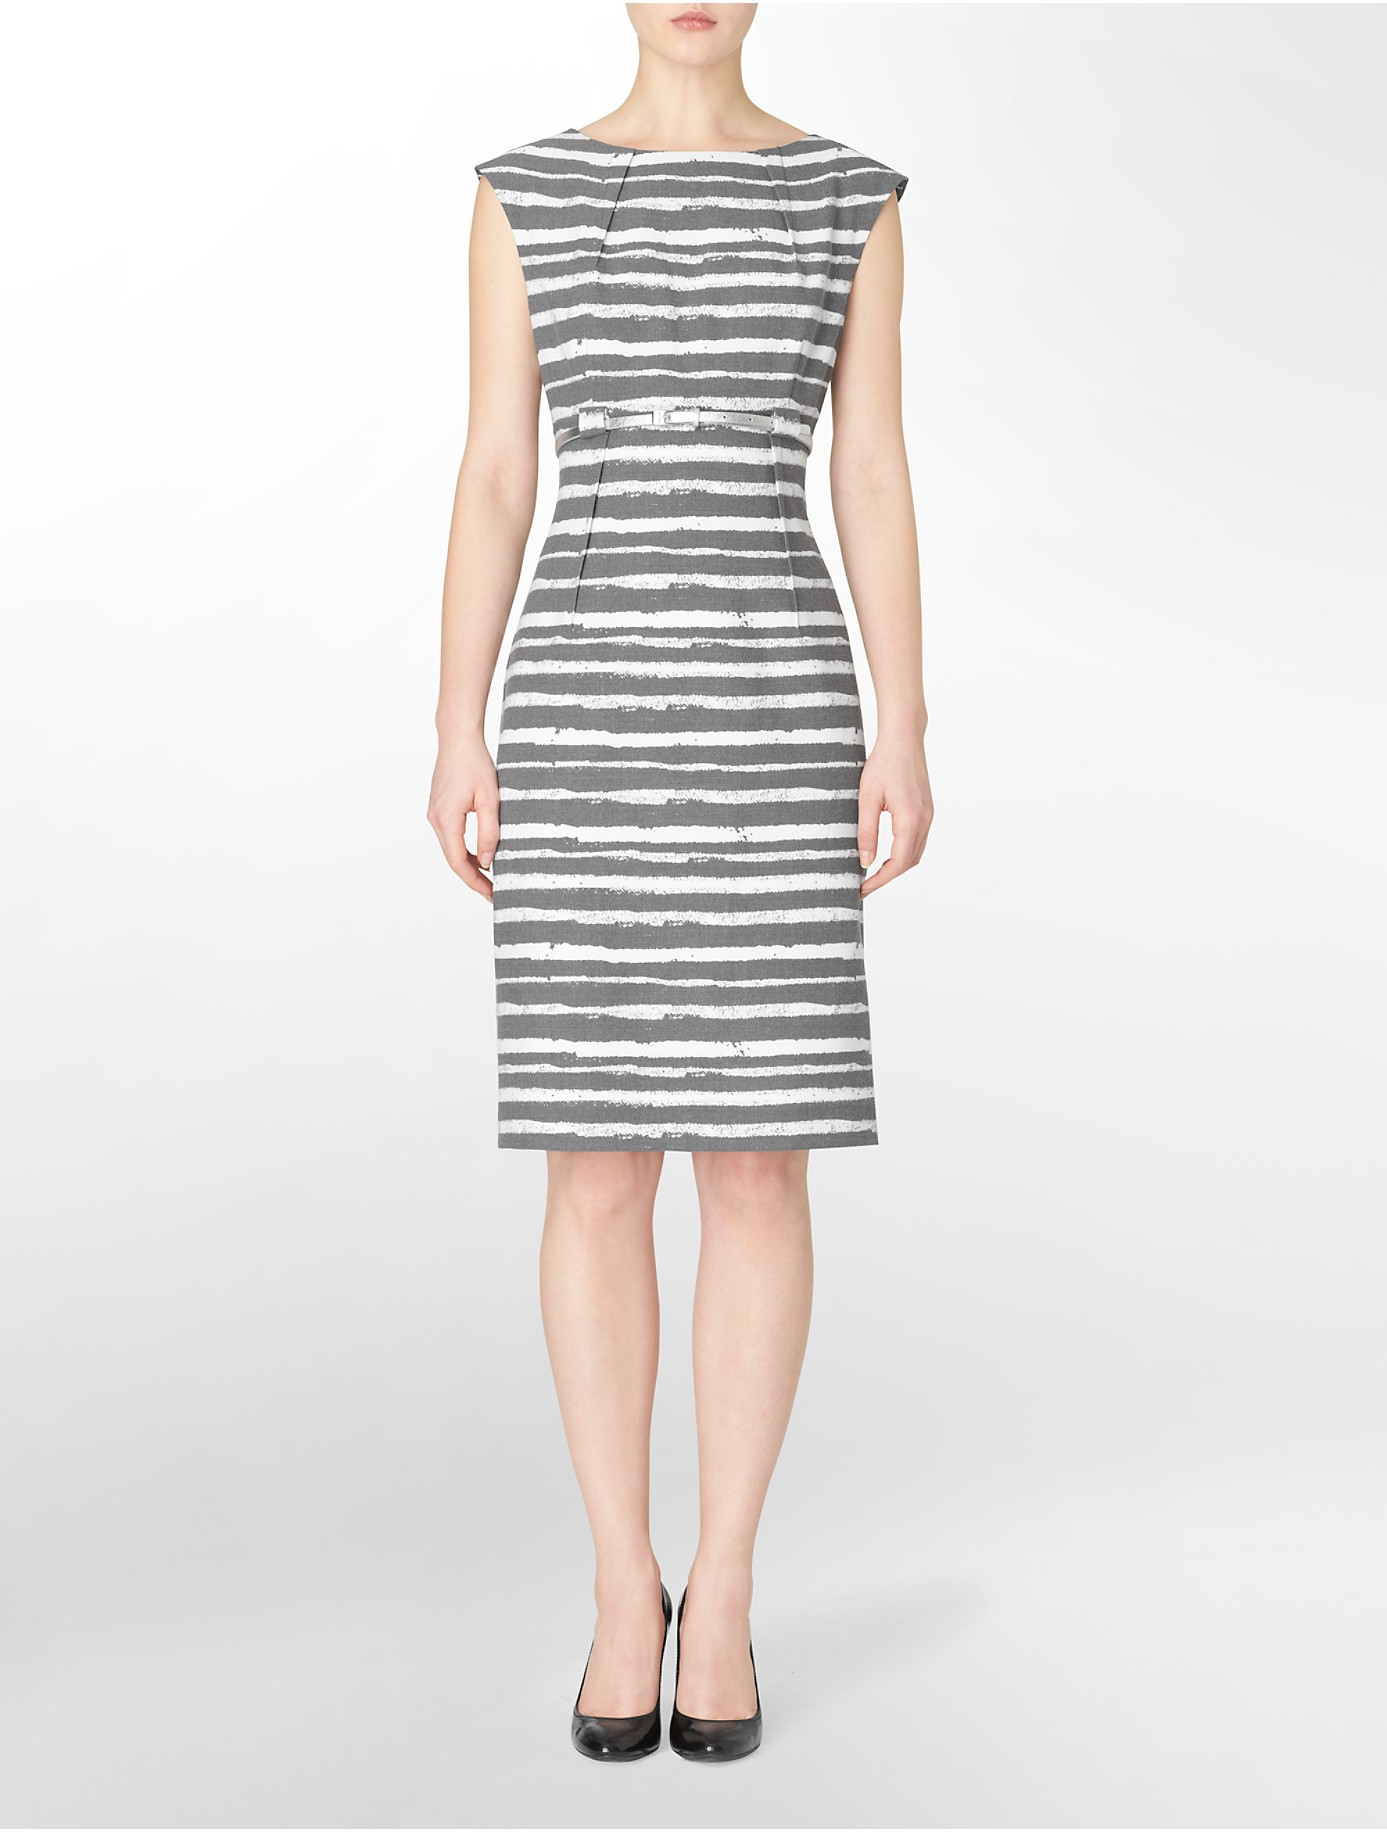 Introducir 48+ imagen calvin klein gray striped dress